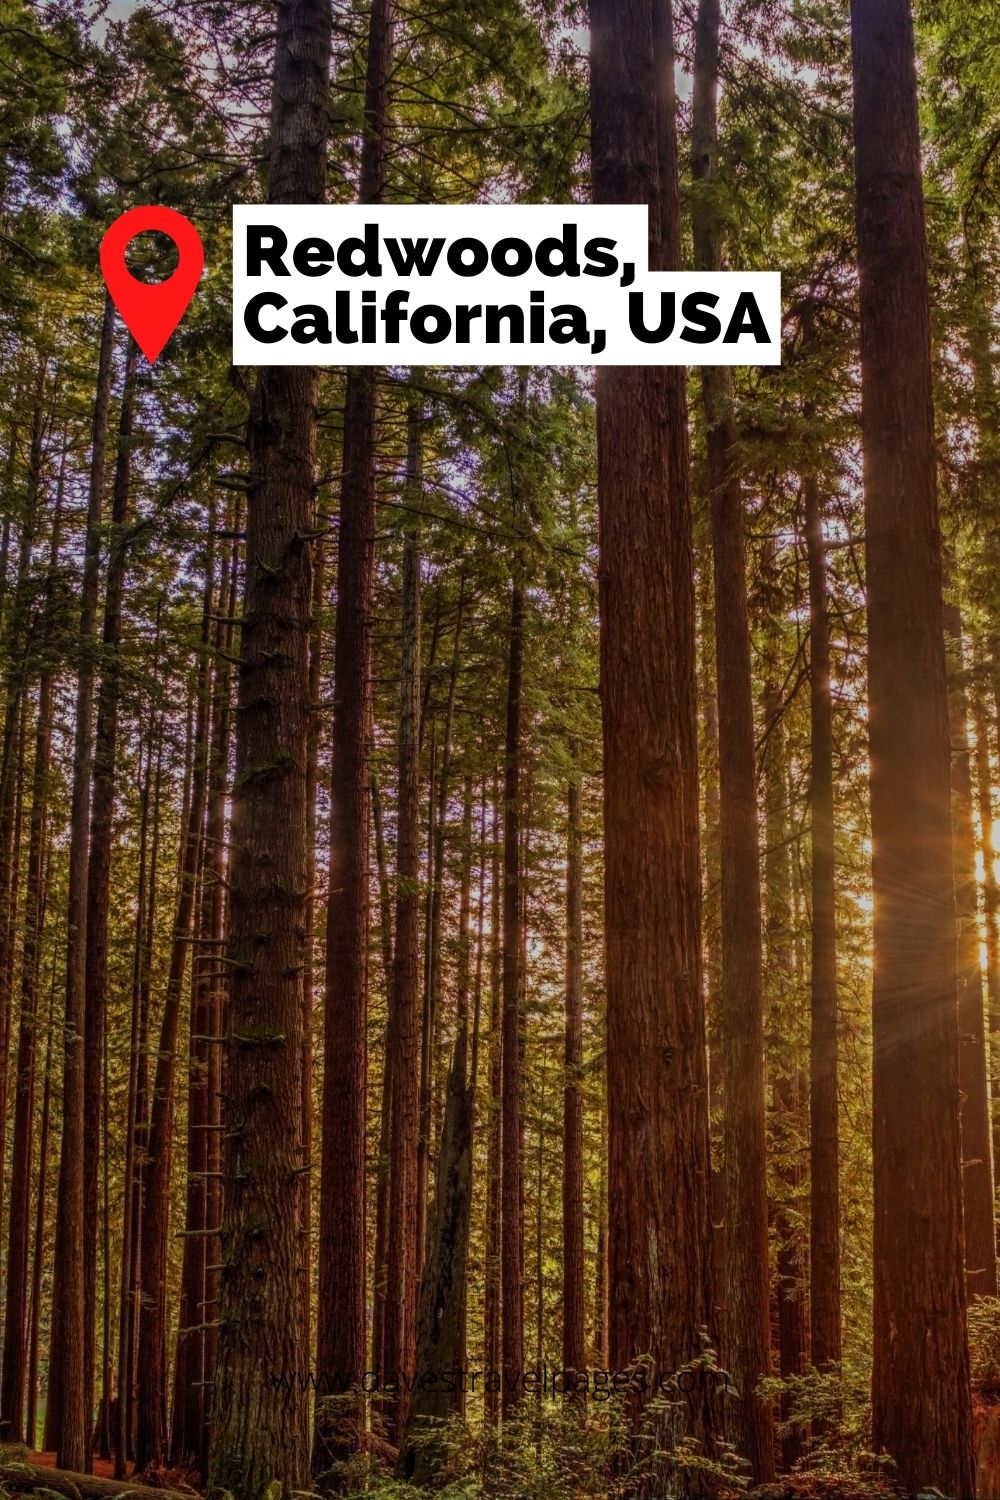 Redwoods, California, USA